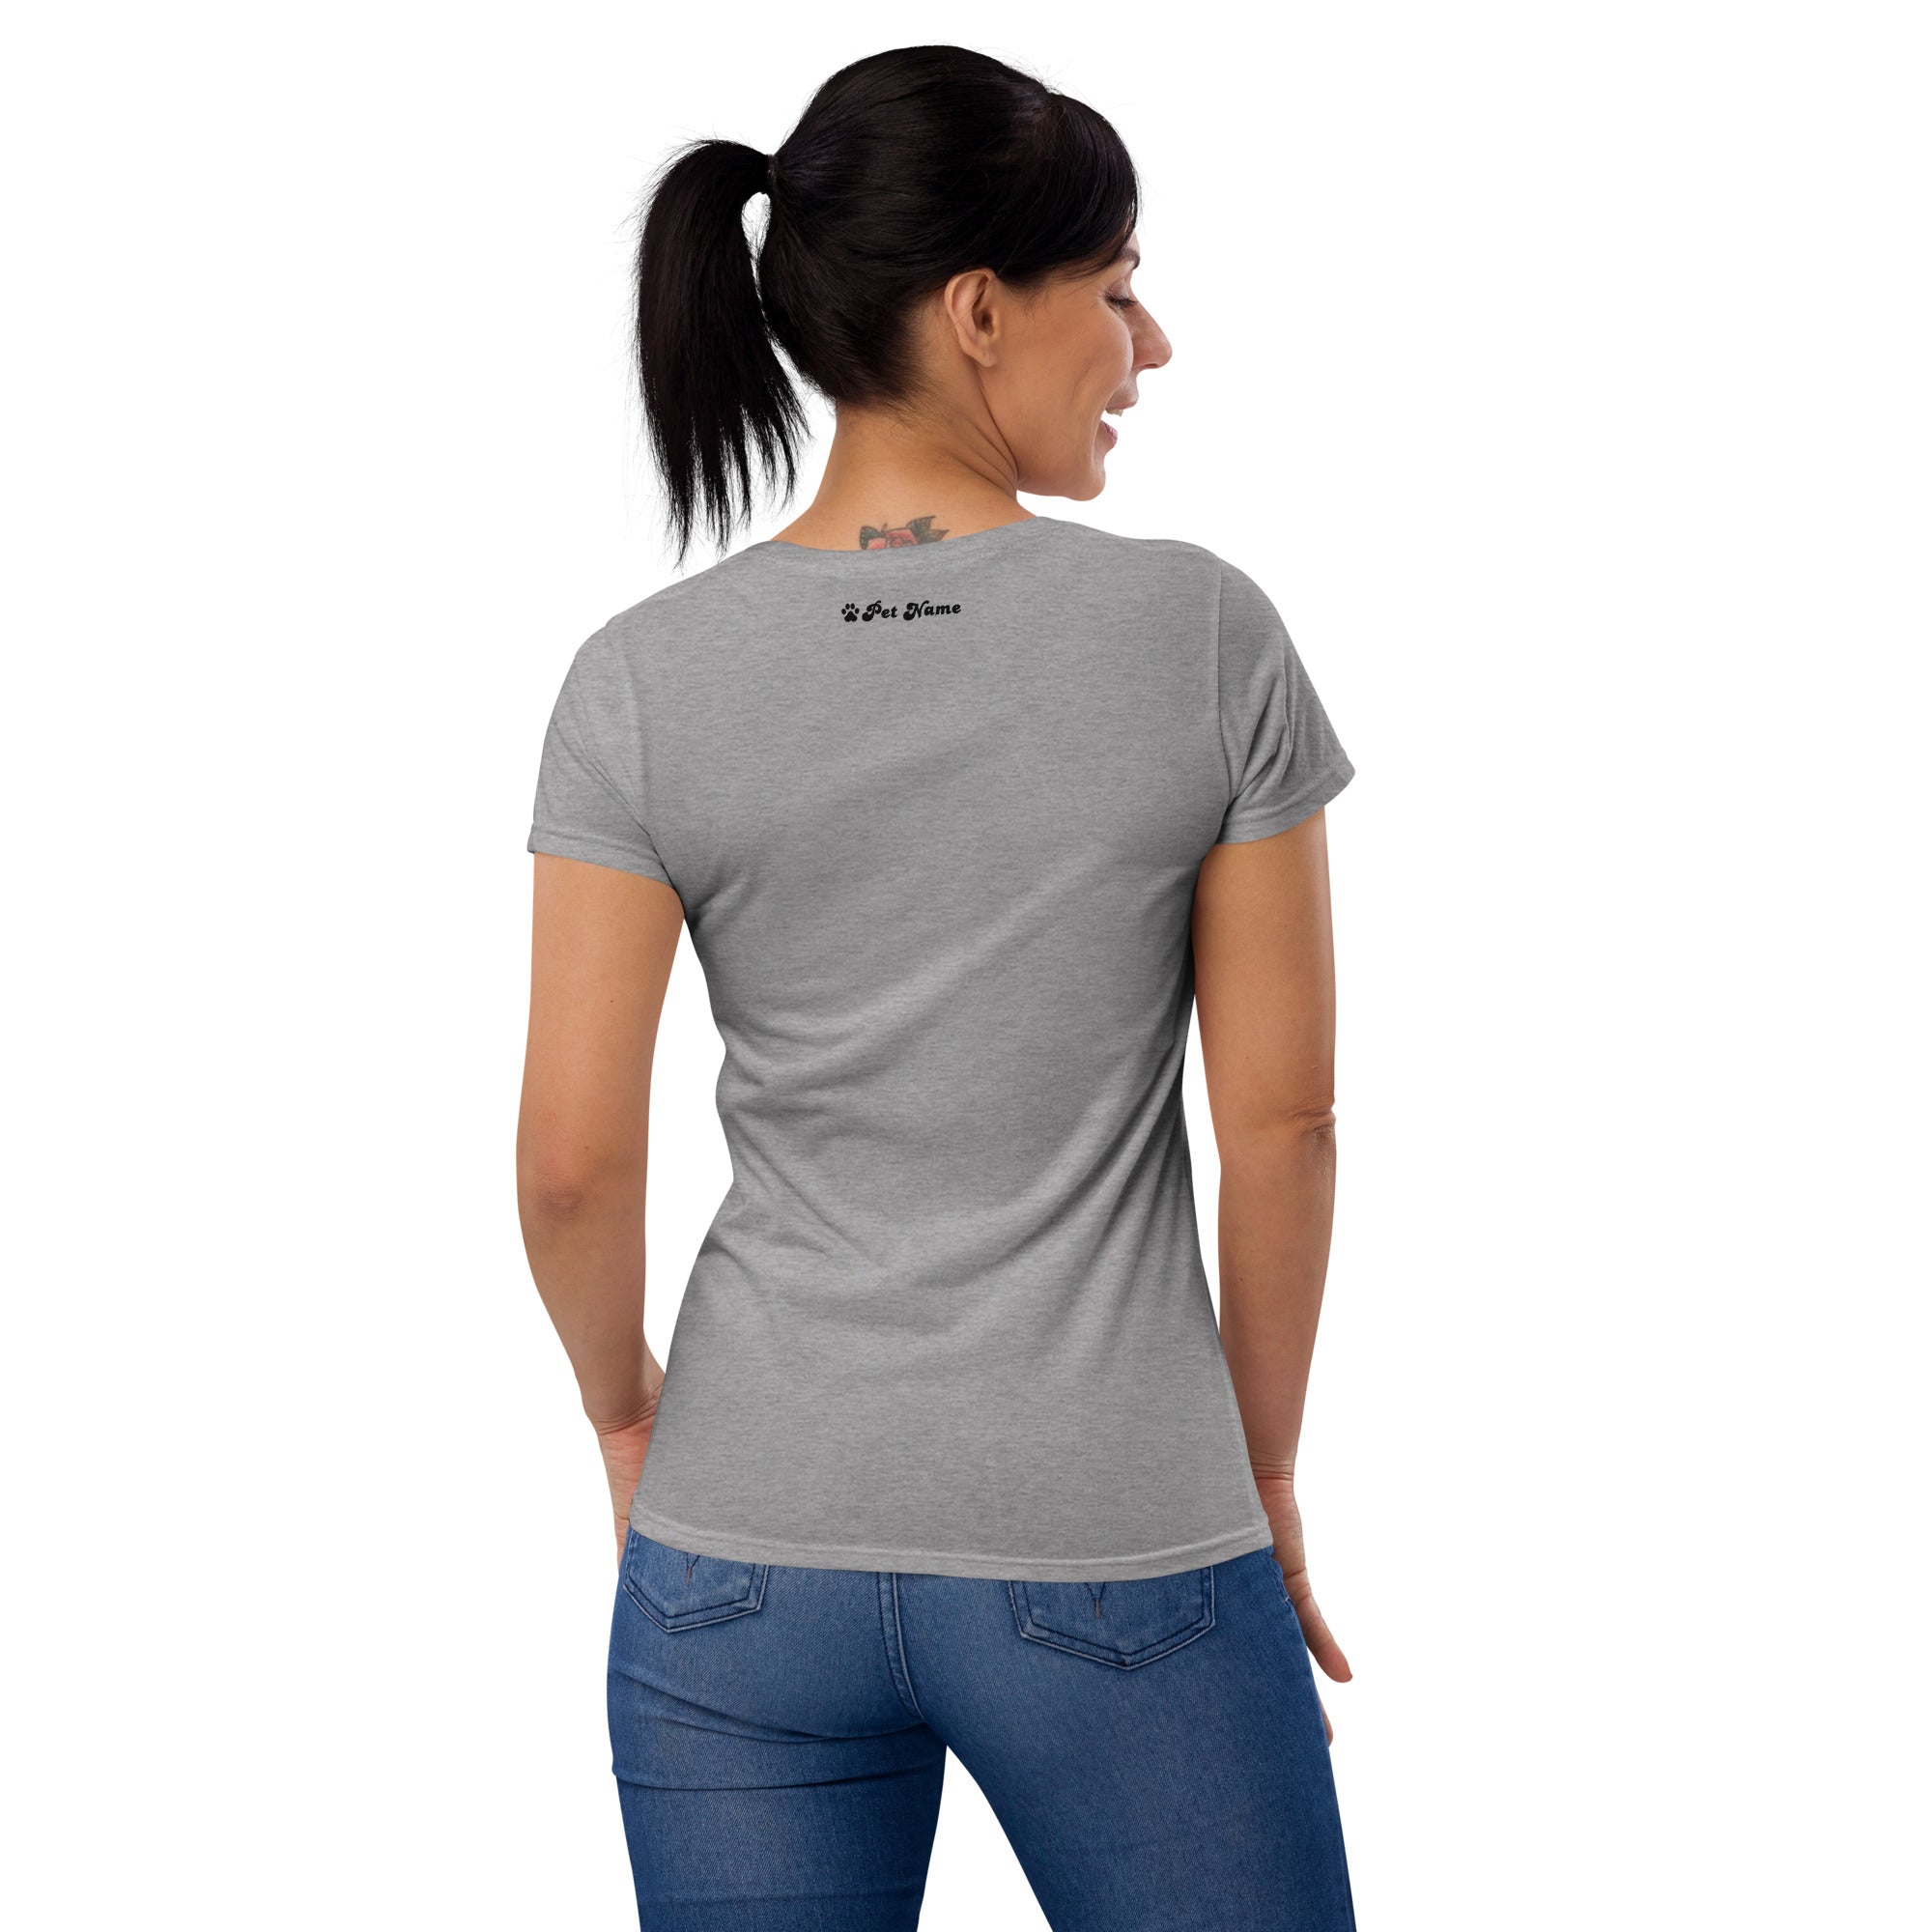 German Shepherd Women's short sleeve t-shirt